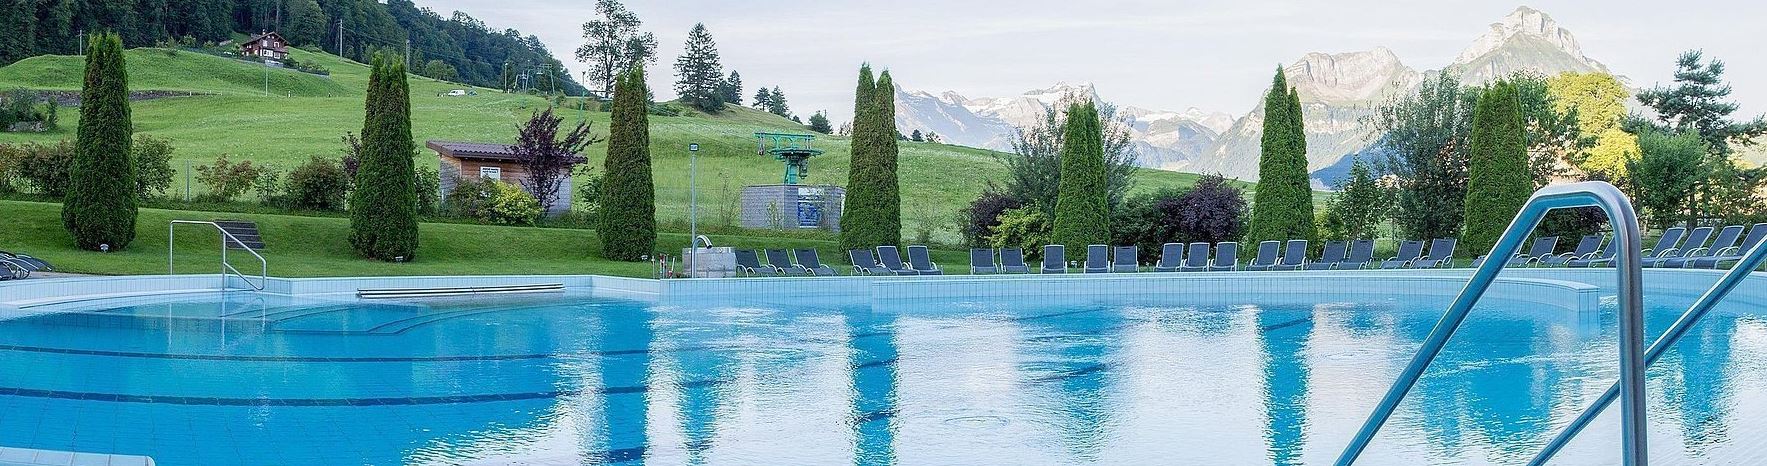 Erlebnisbad Swiss Holiday Park